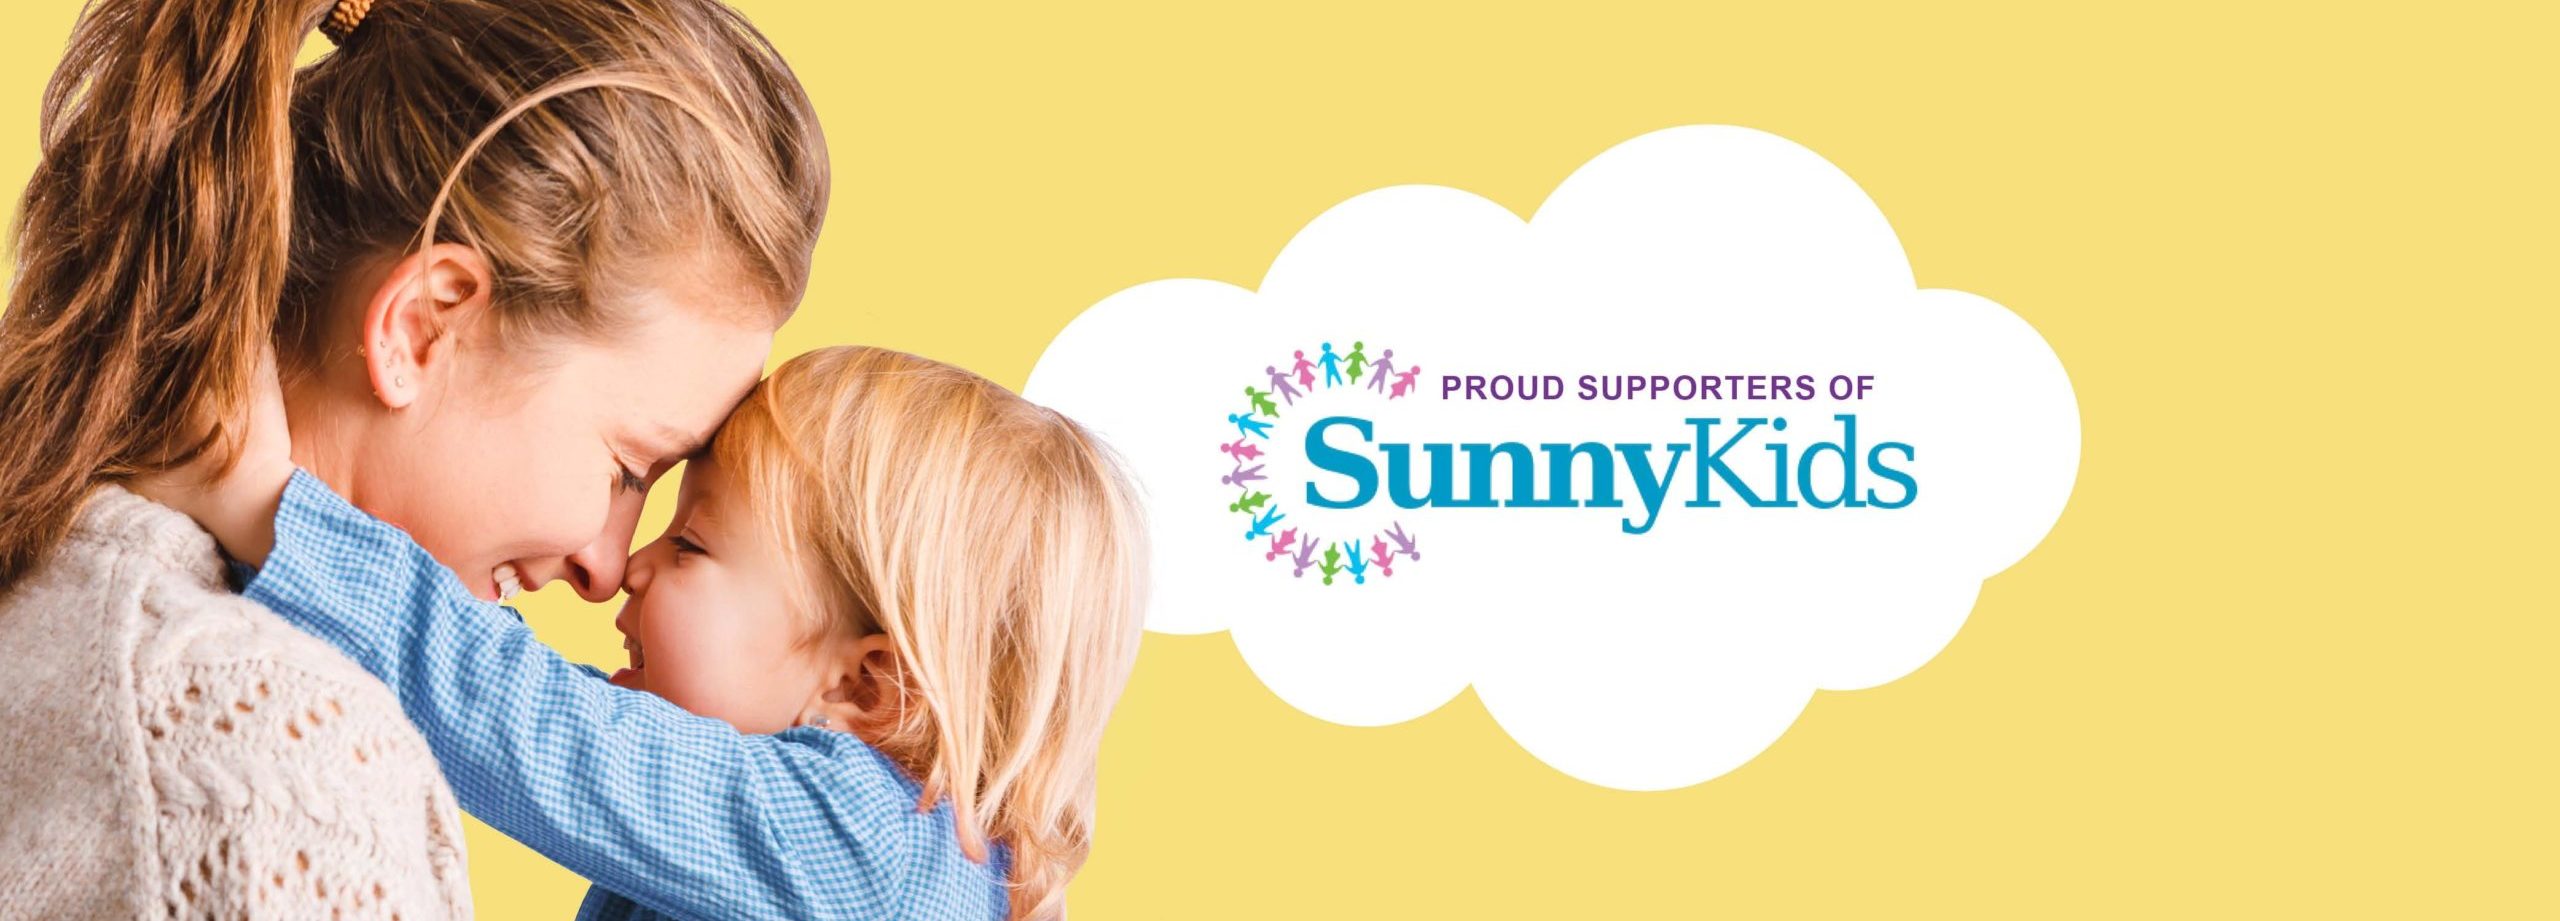 sunnykids-banner (2)